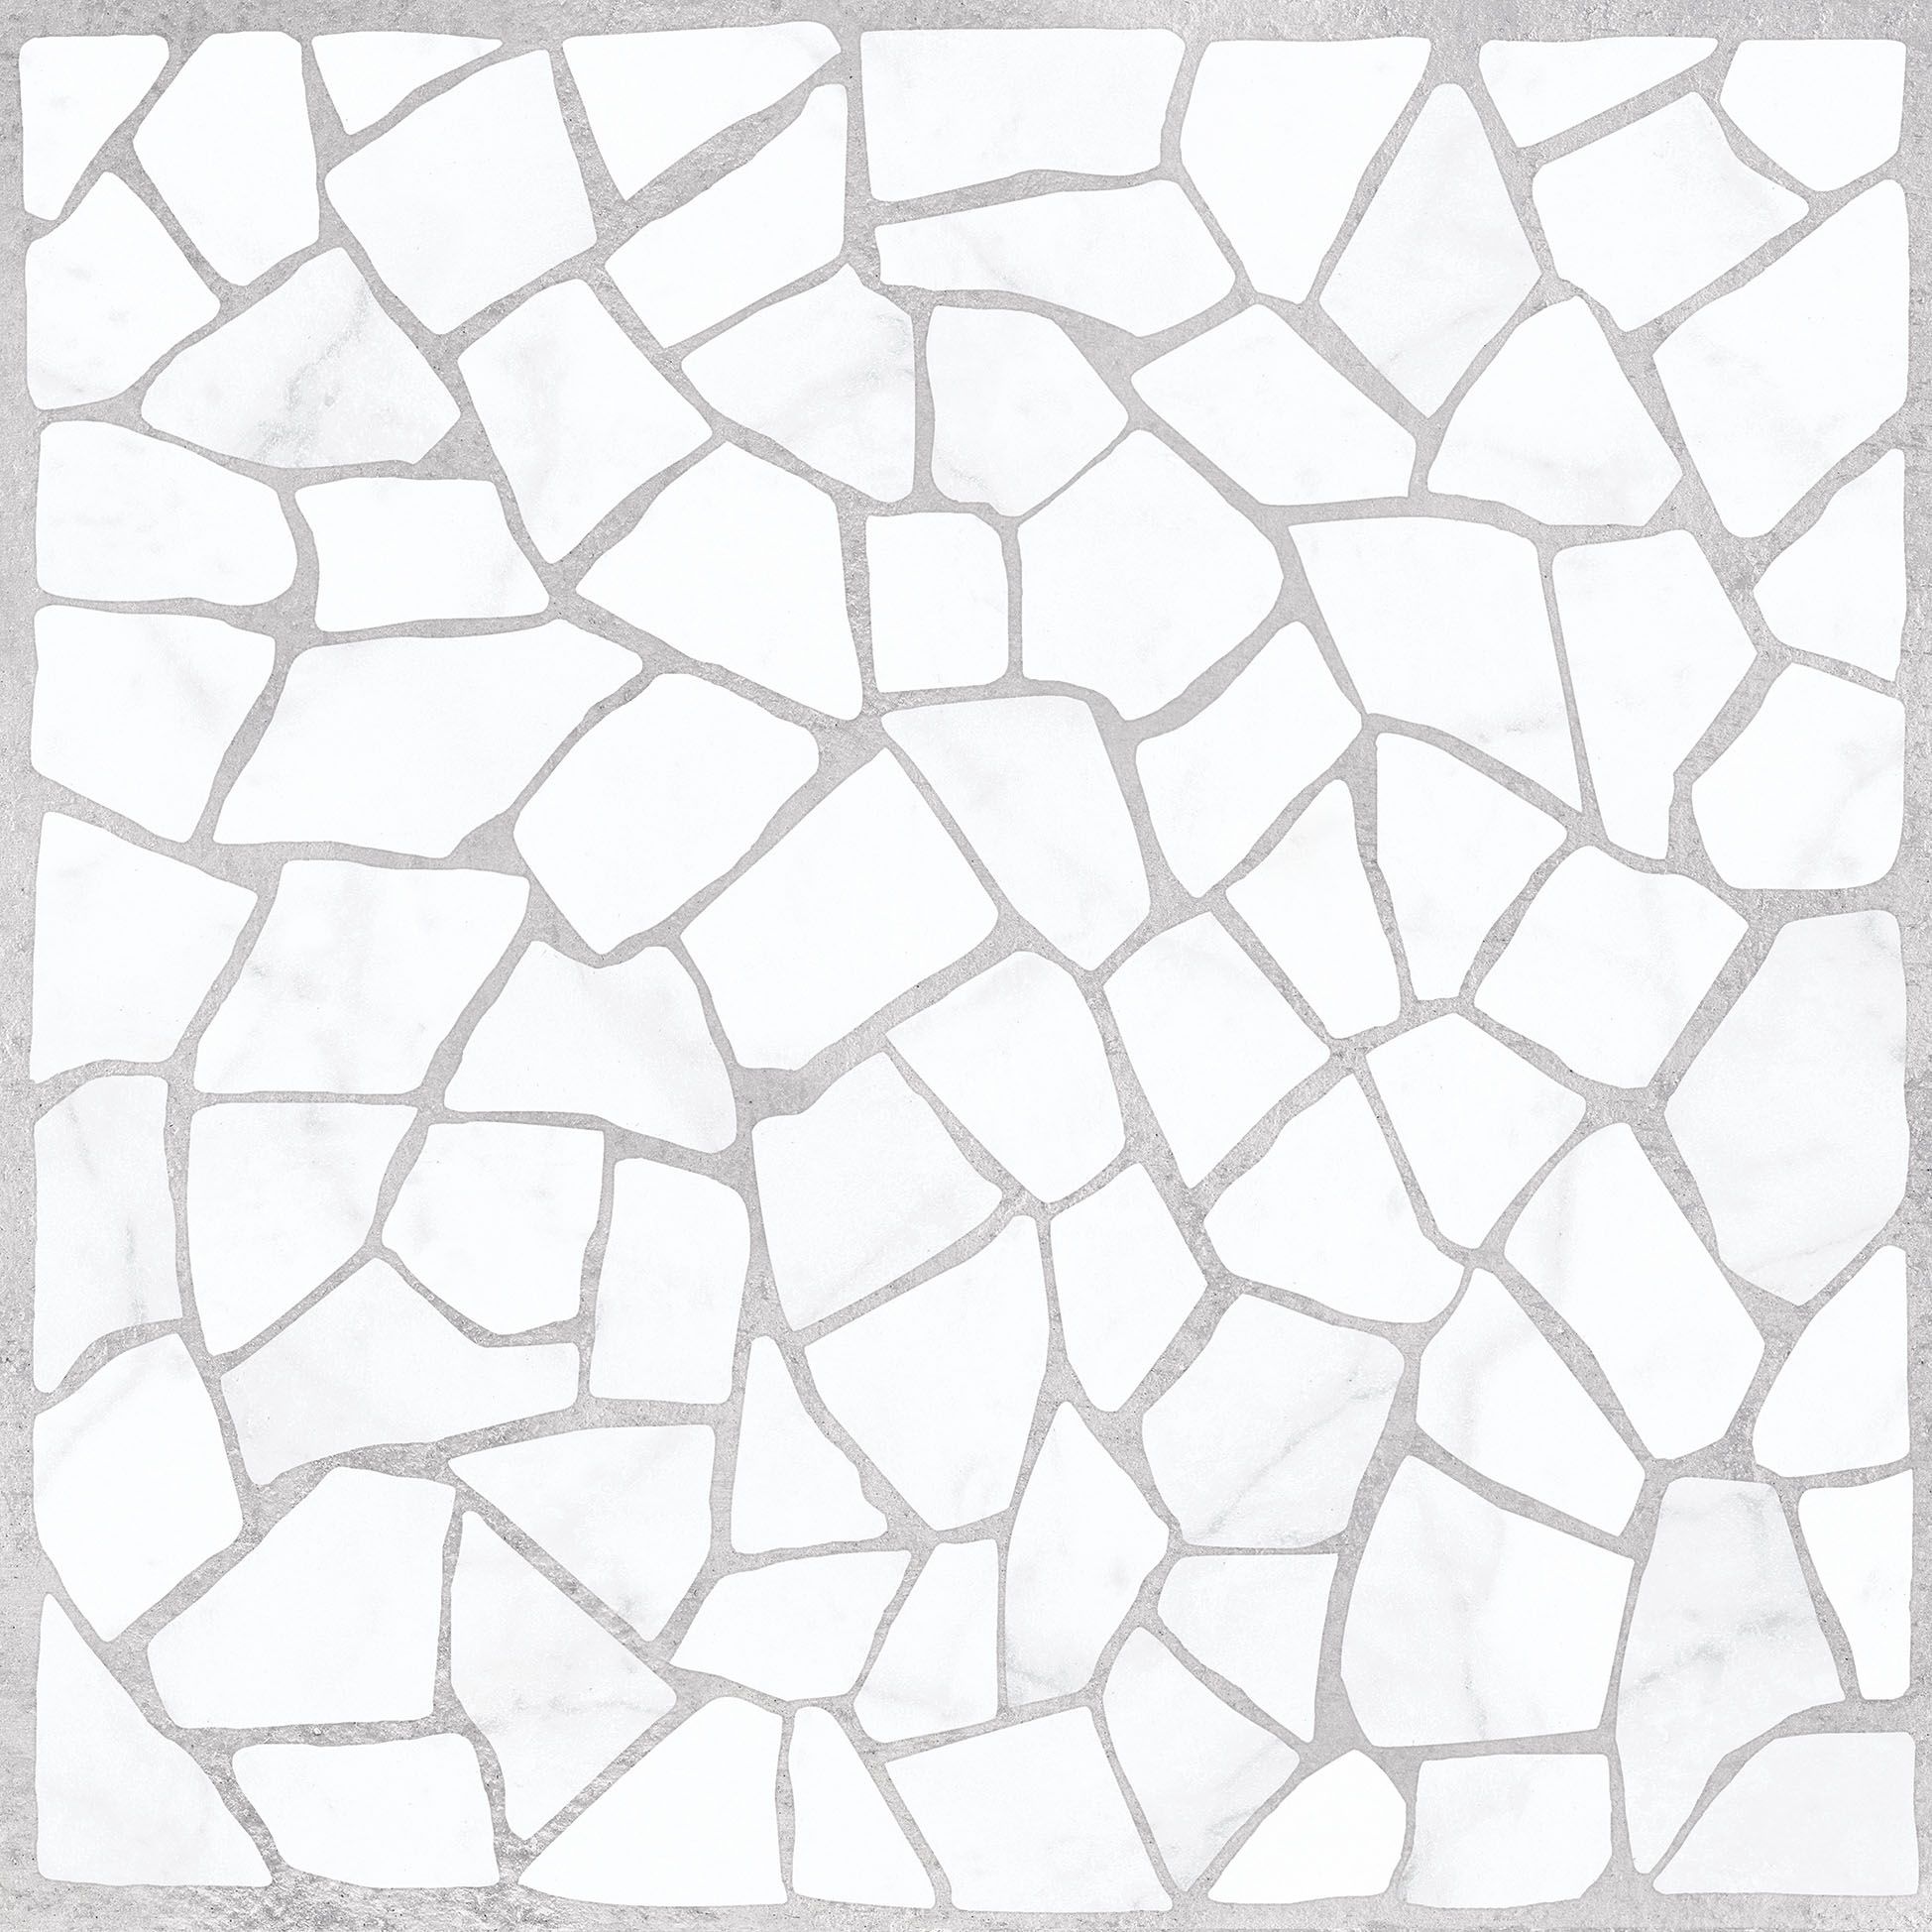 Mosaic white 300x300 8F0730